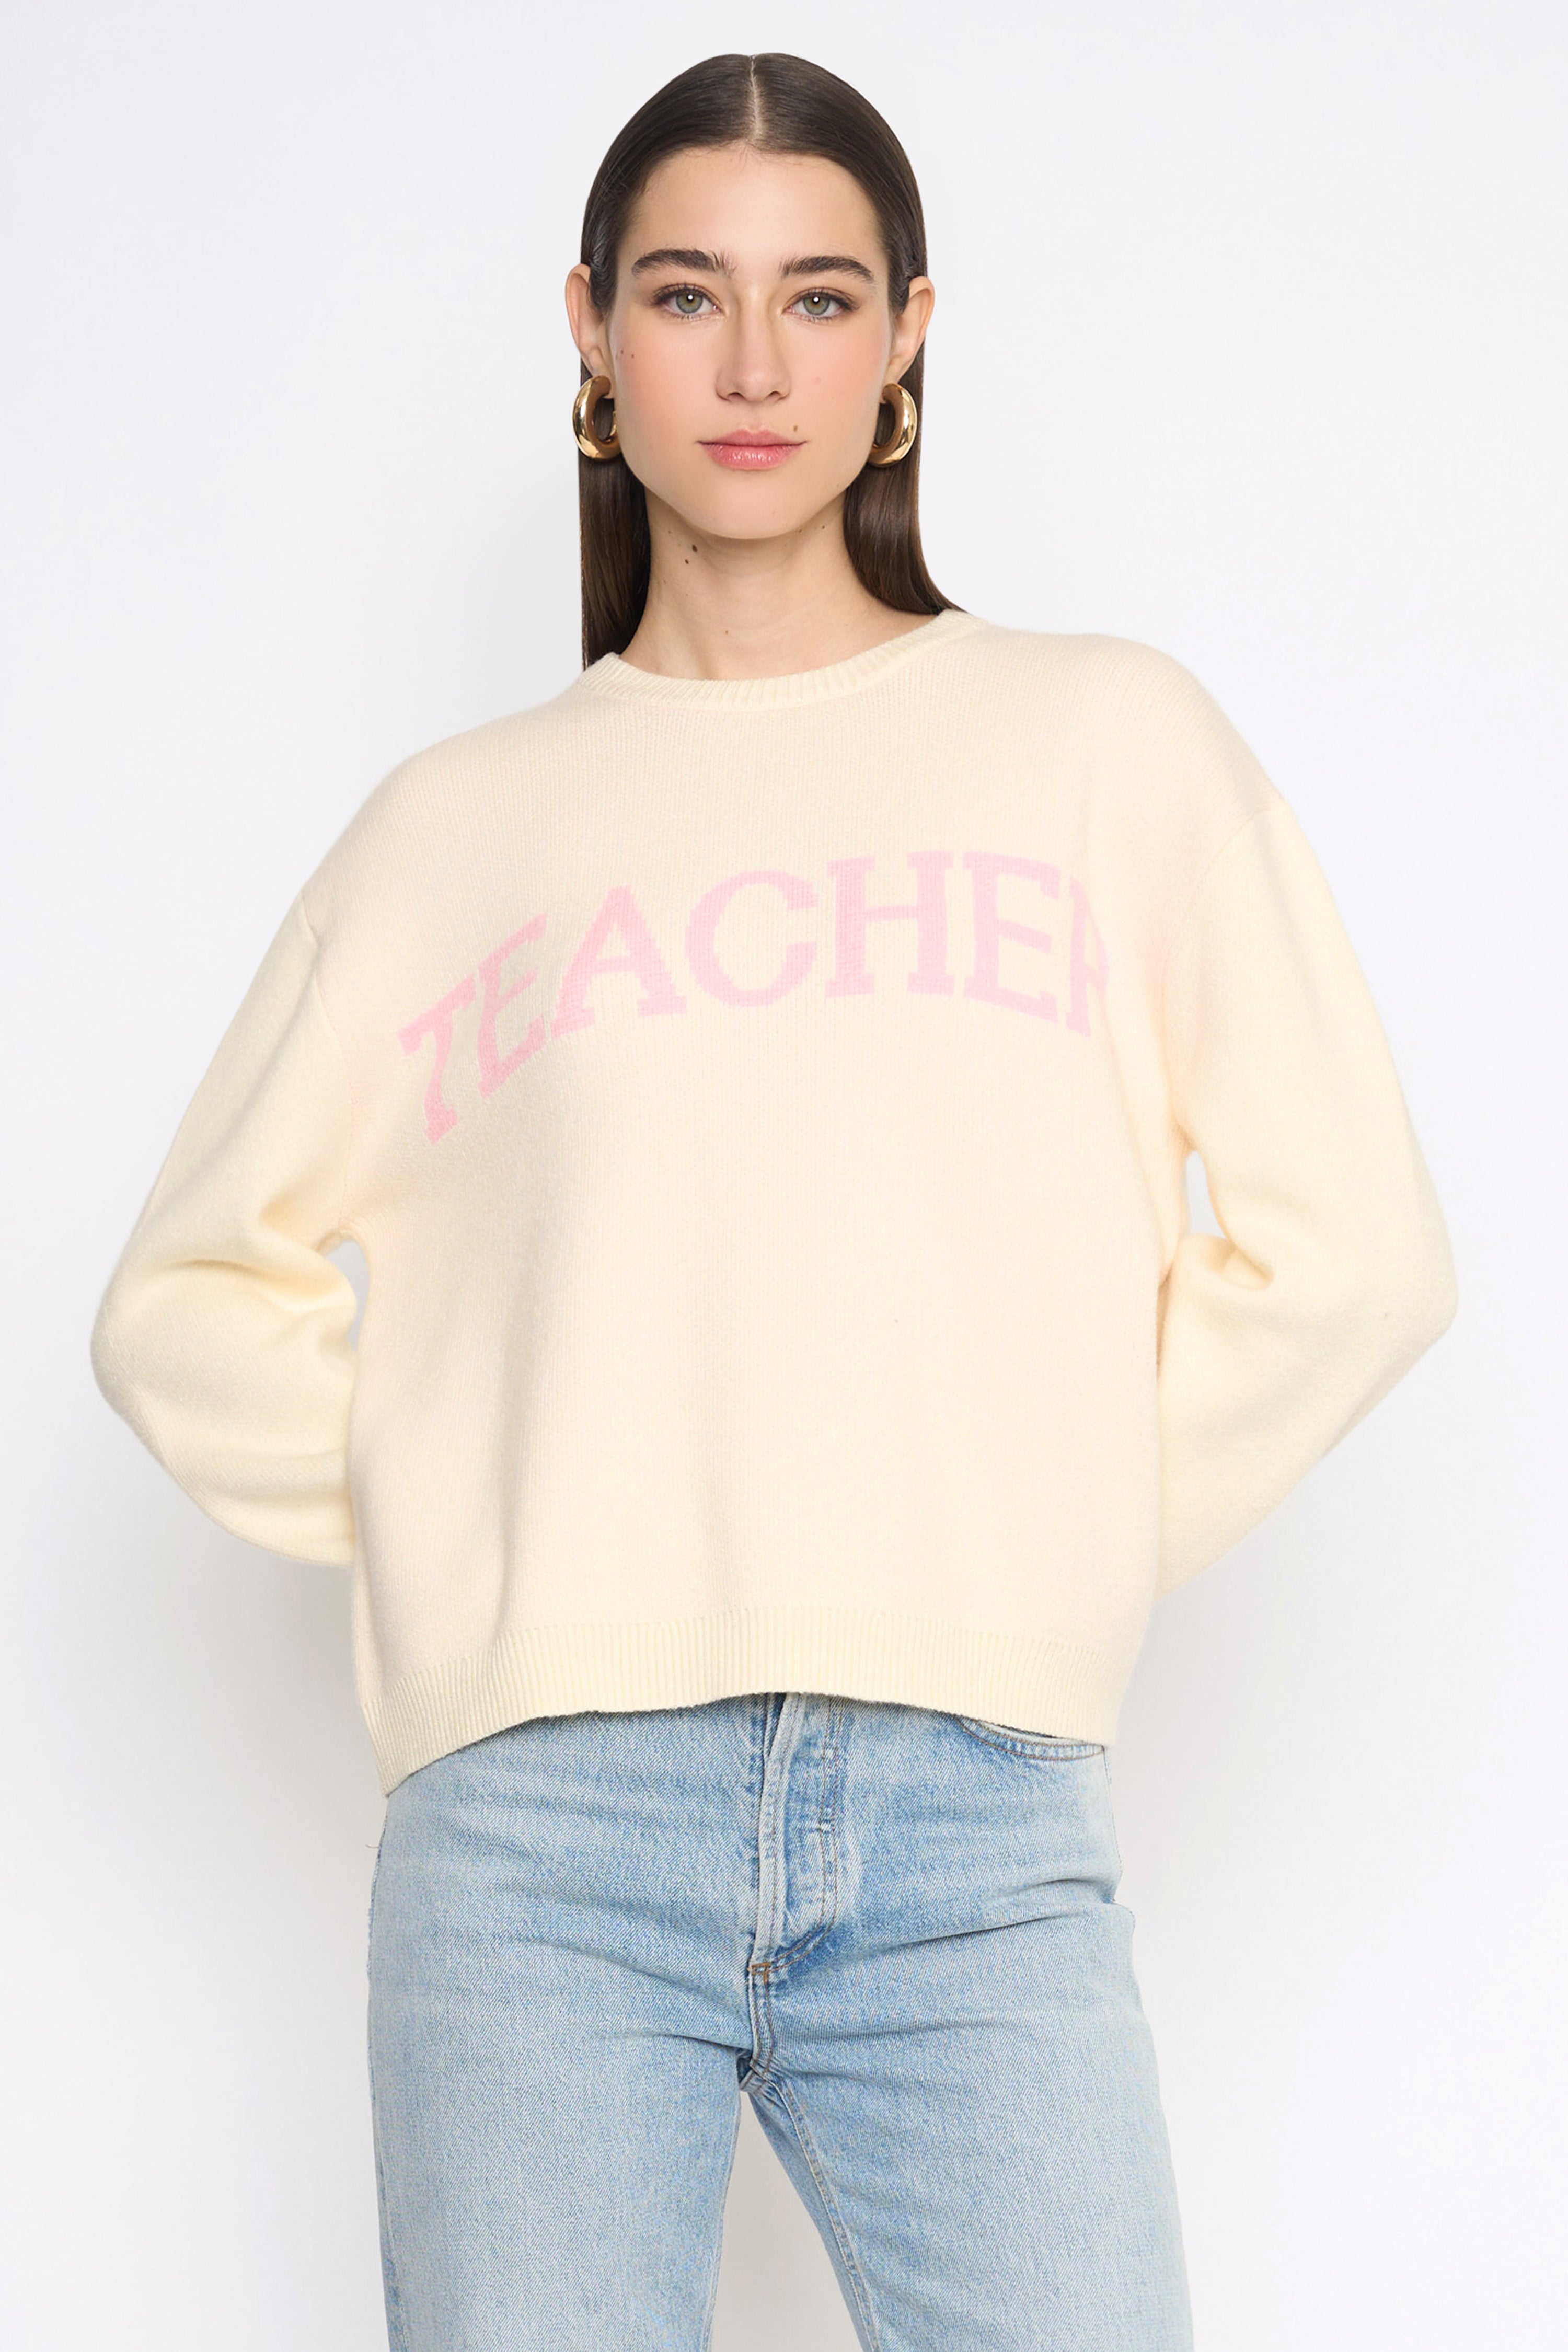 Teacher Sweater